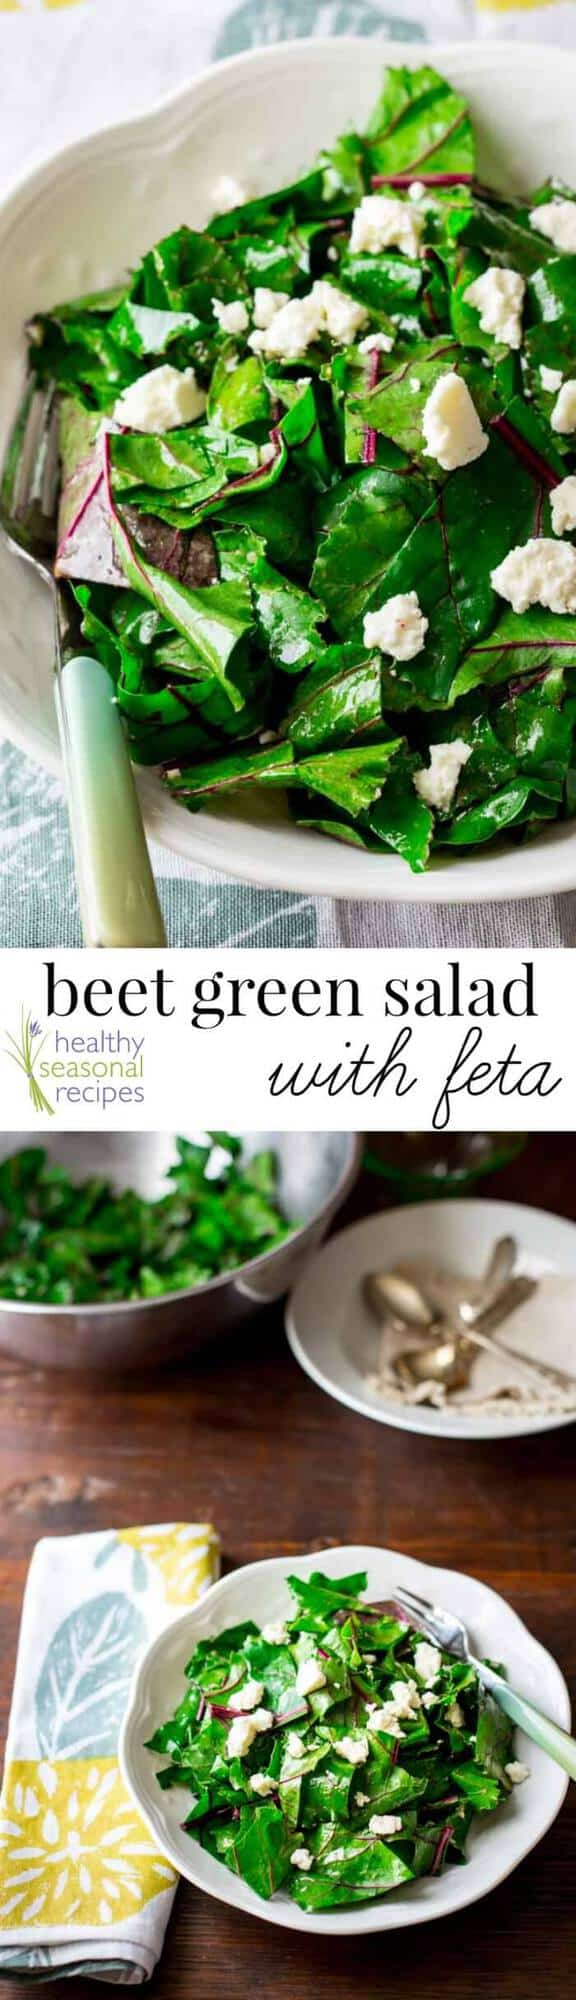 Beet Greens Salad with Feta and Killer Garlic dressing with Sherry Vinegar and Dijon on healthyseasonalrecipes.com vegetarian and wheat-free